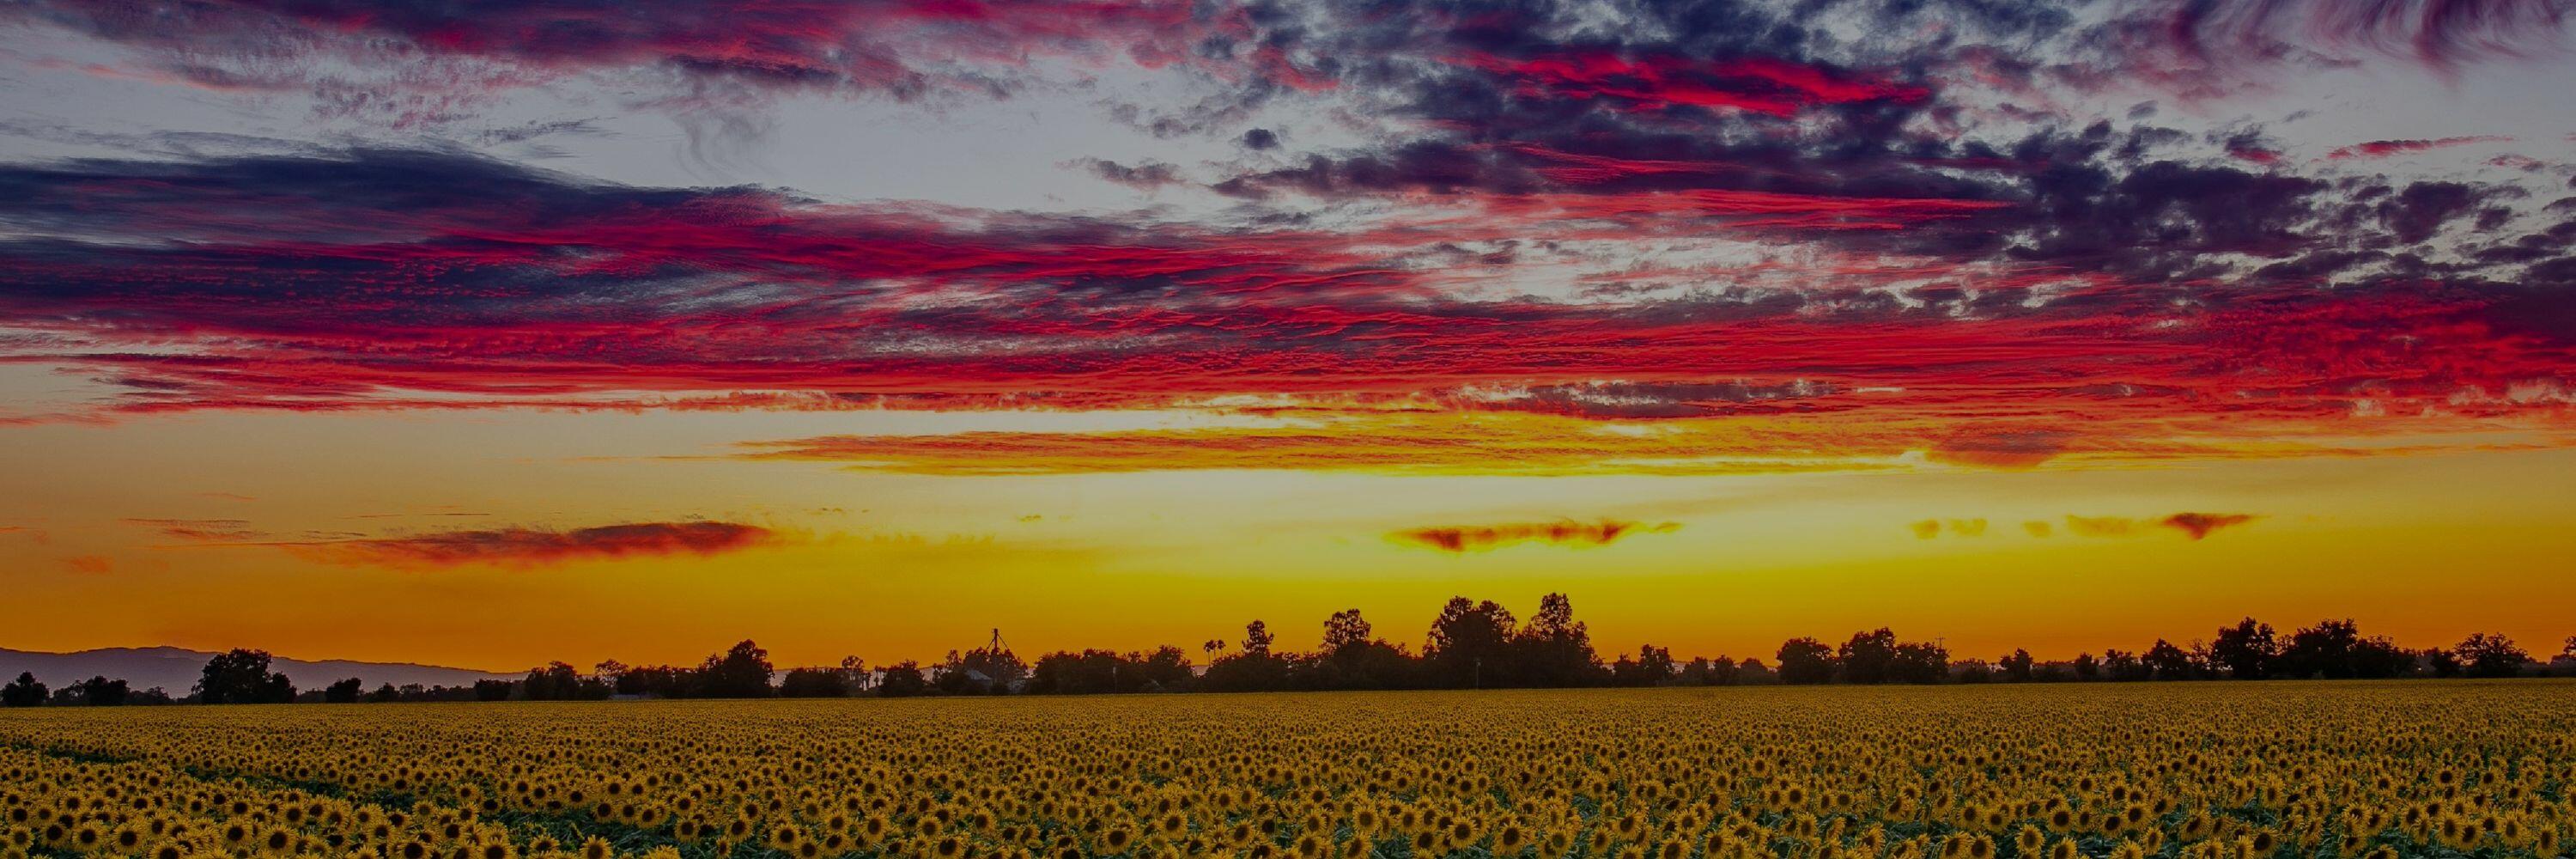 Woodland, California Sunflower Field at sunset